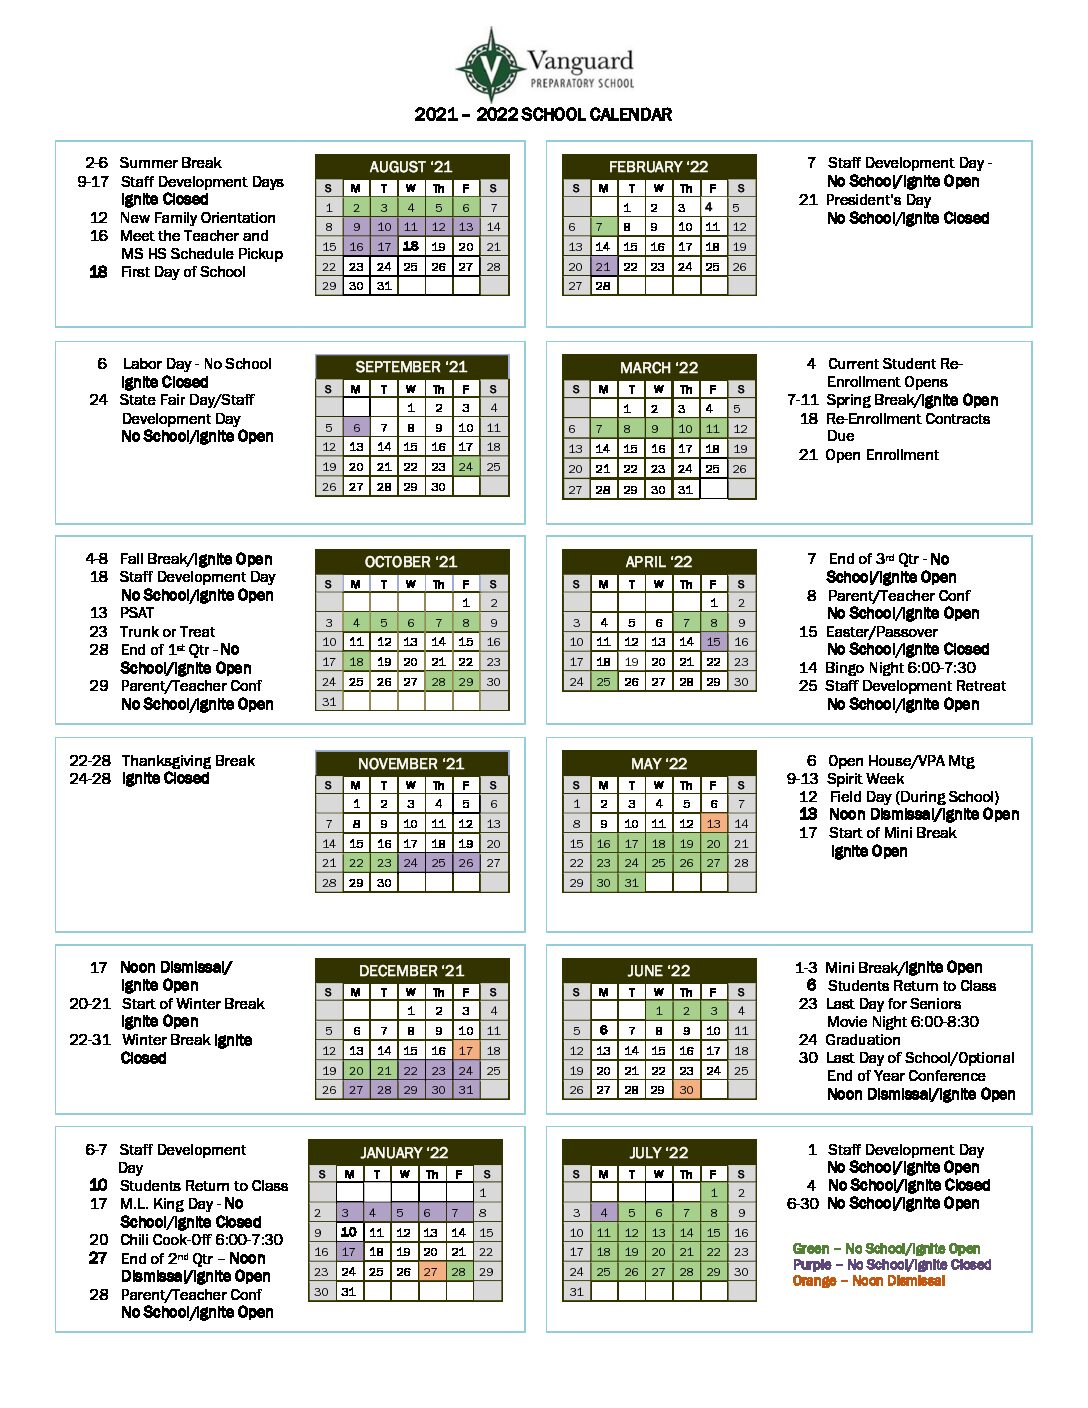 Mississippi State Academic Calendar Fall 2022 2021-2022 School Calendar_Final | Vanguard Preparatory School